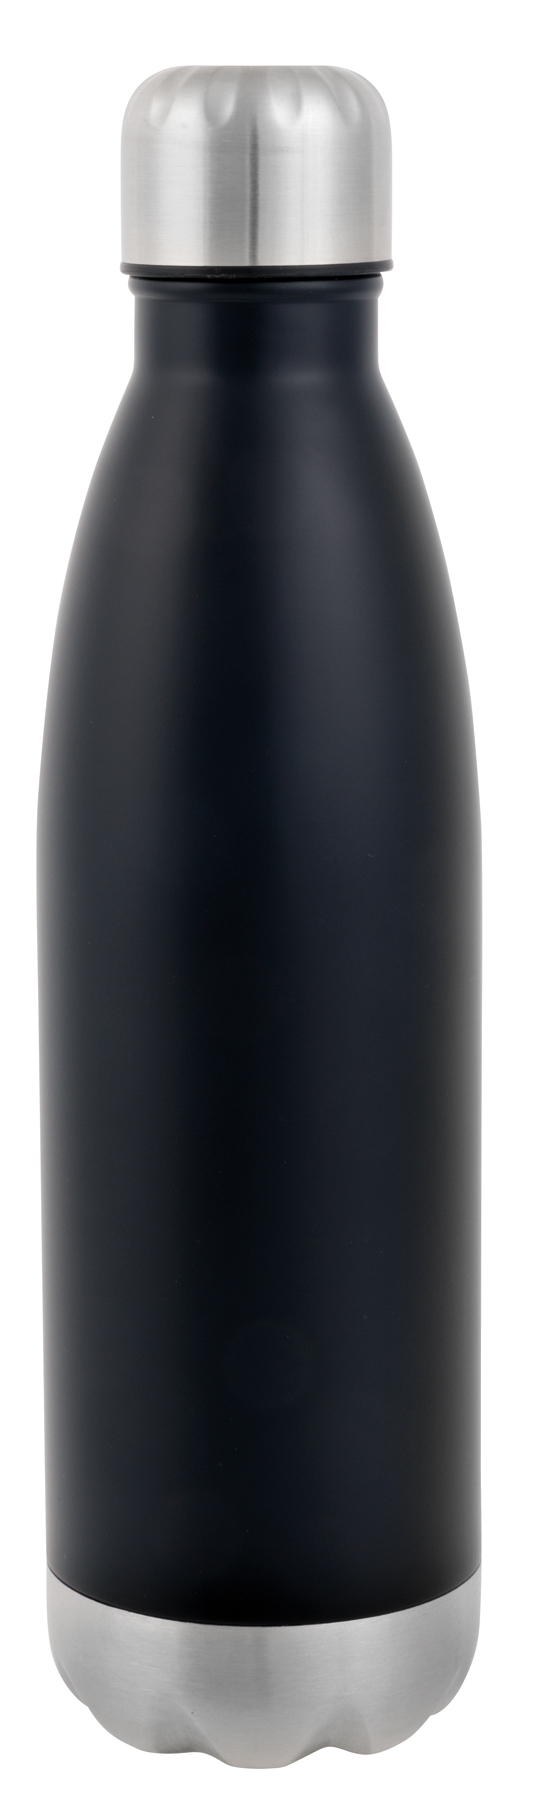 Double-walled vacuum bottle GOLDEN TASTE - black